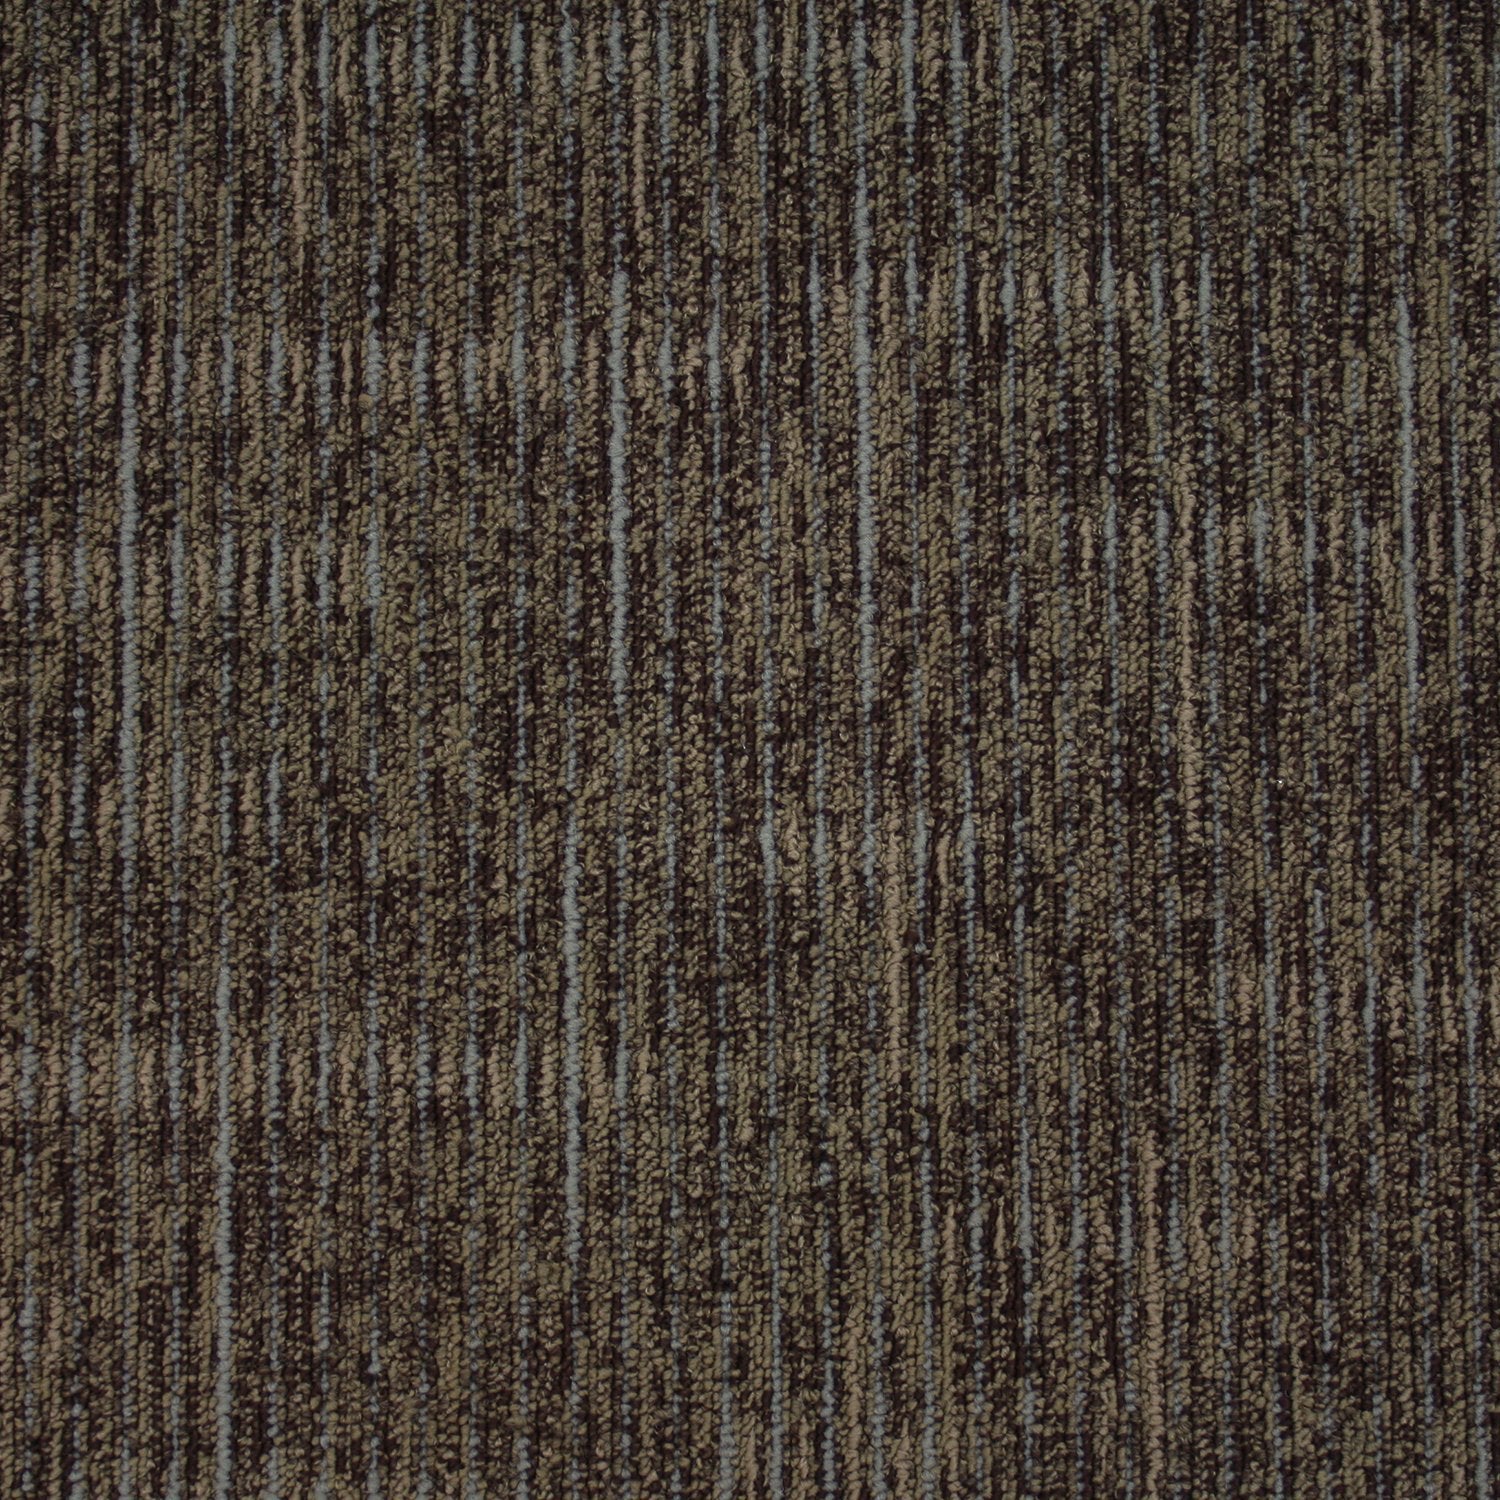 Kraus Carpet Tile Perspective Texture 724006 Sample